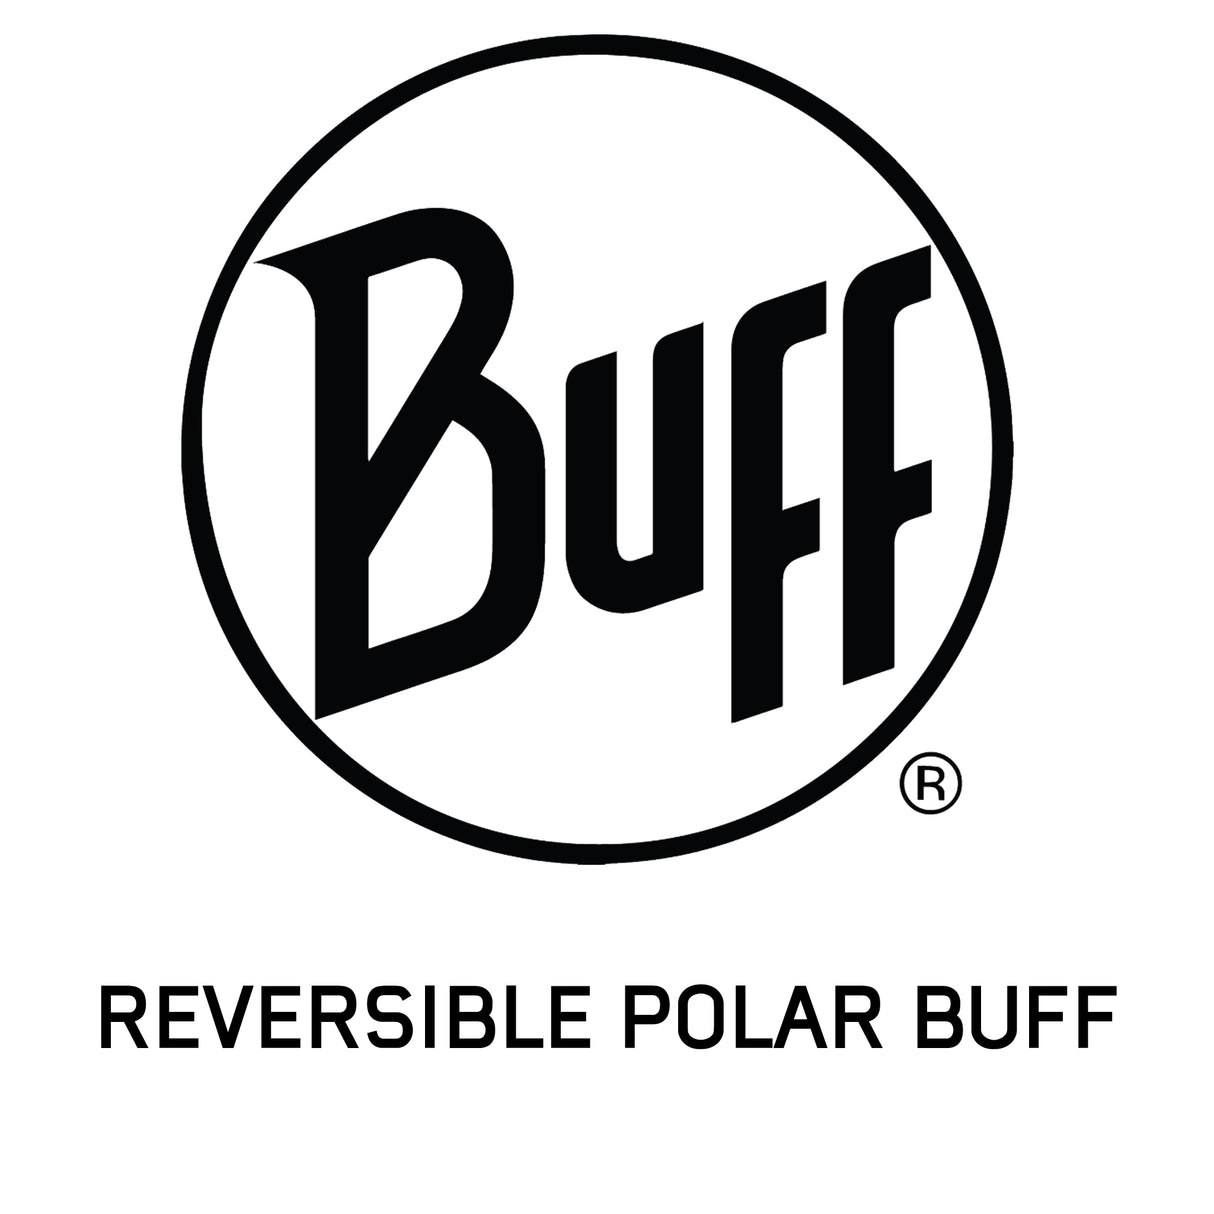 Reversible Polar Buff